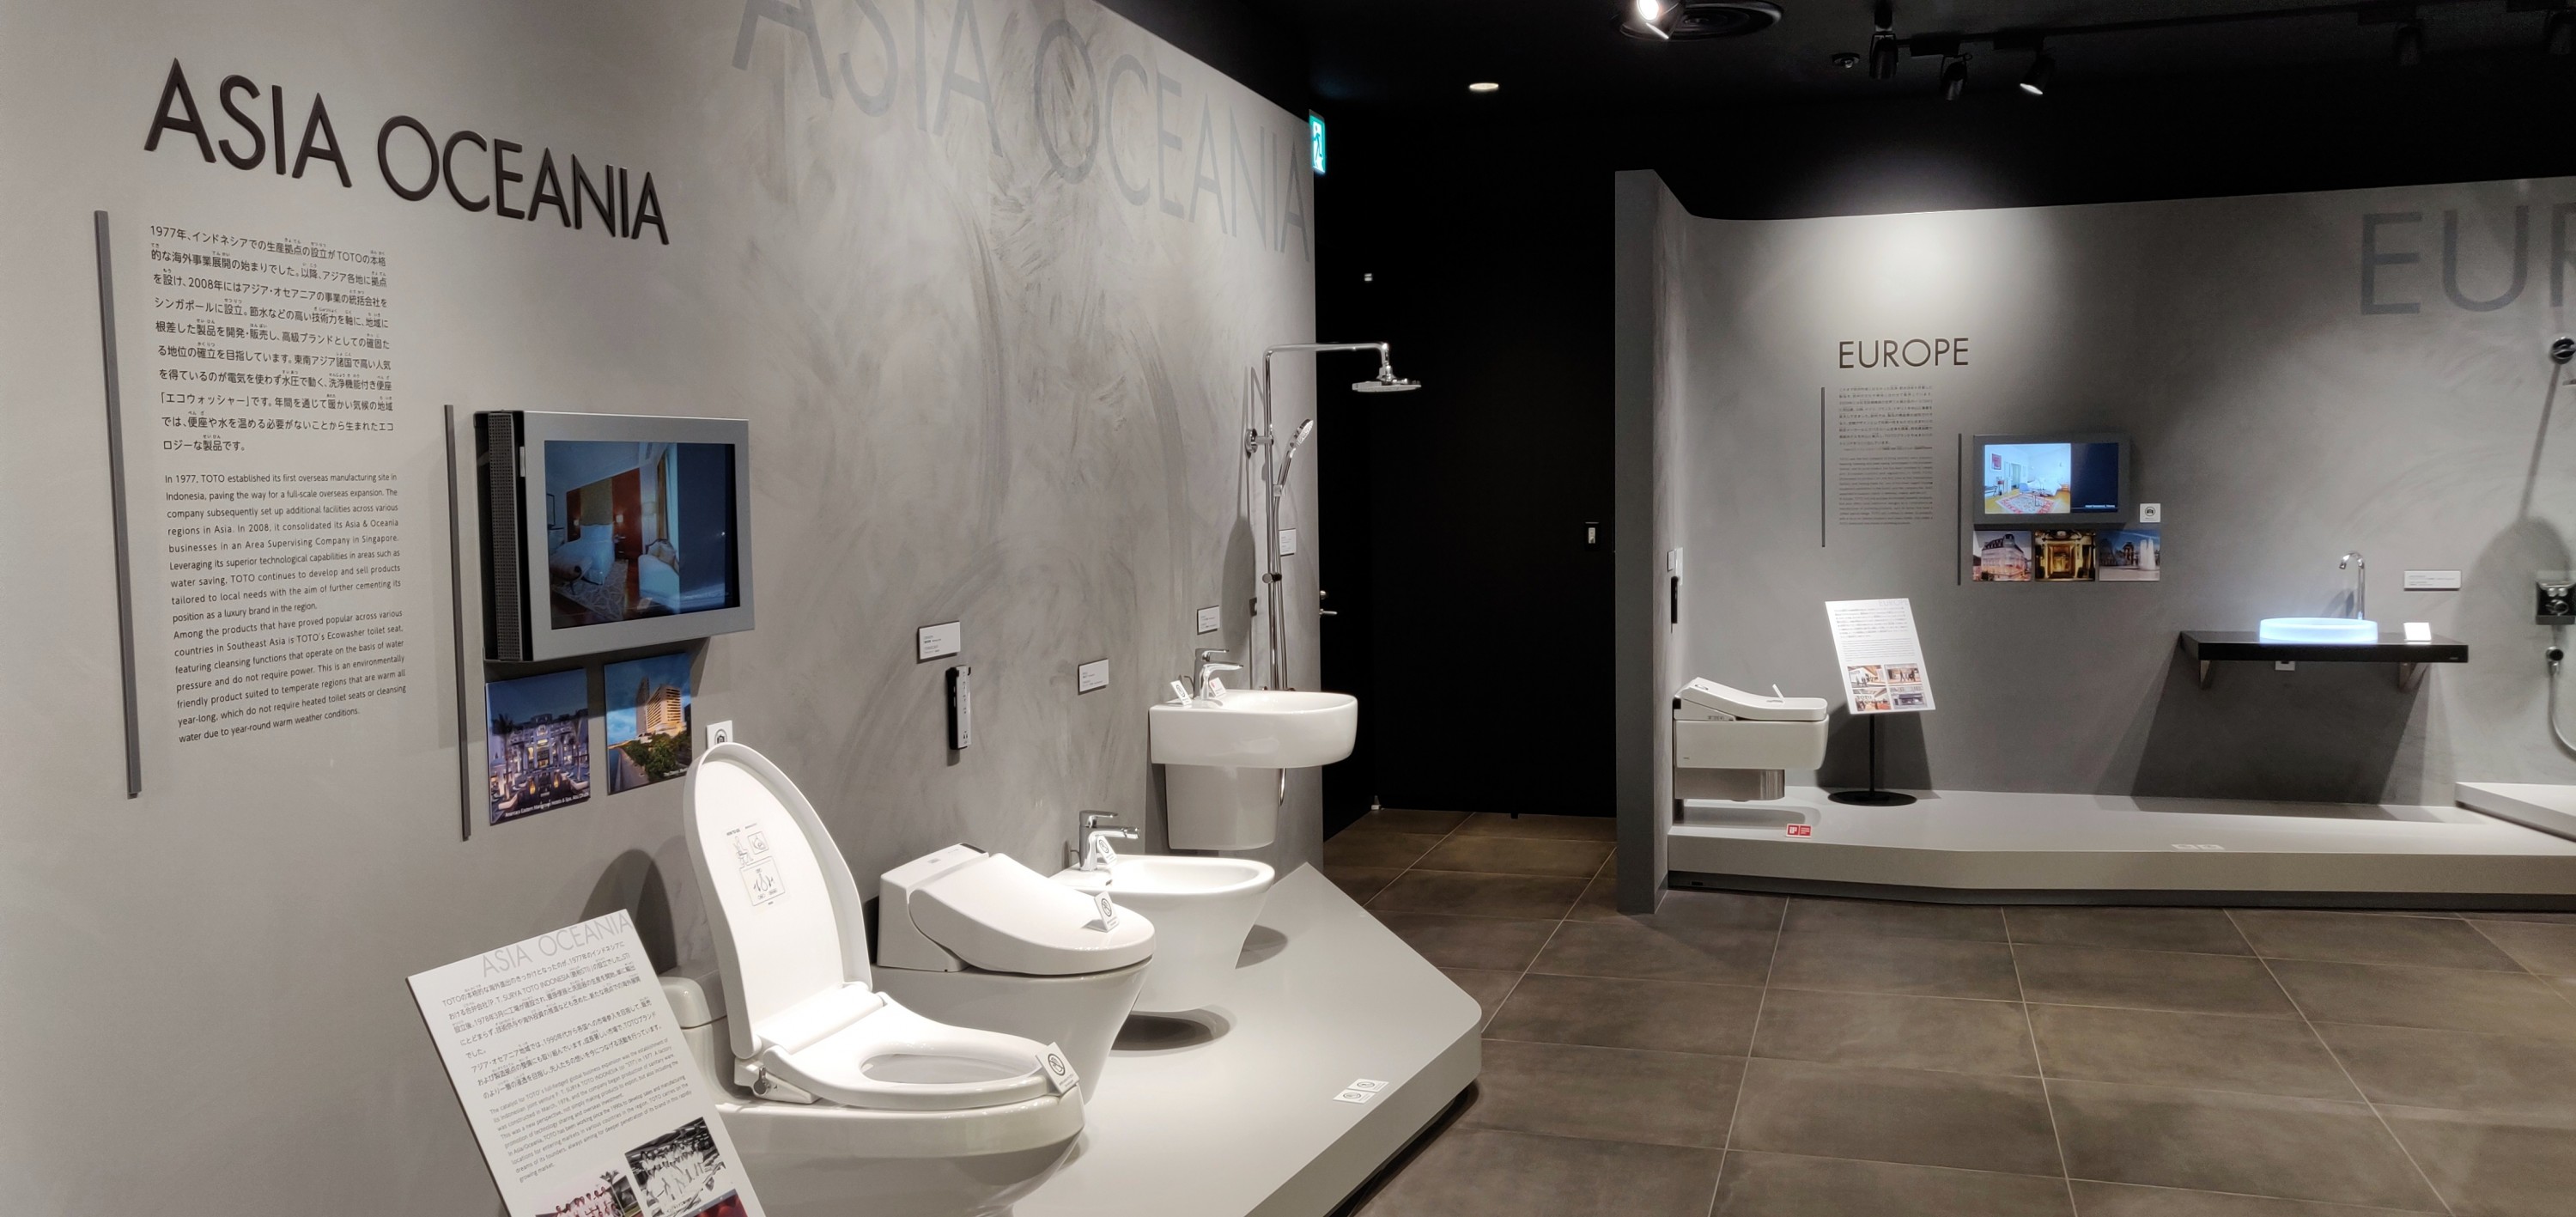 Toto toilet museum : Kitakyushu Japan | Visions of Travel